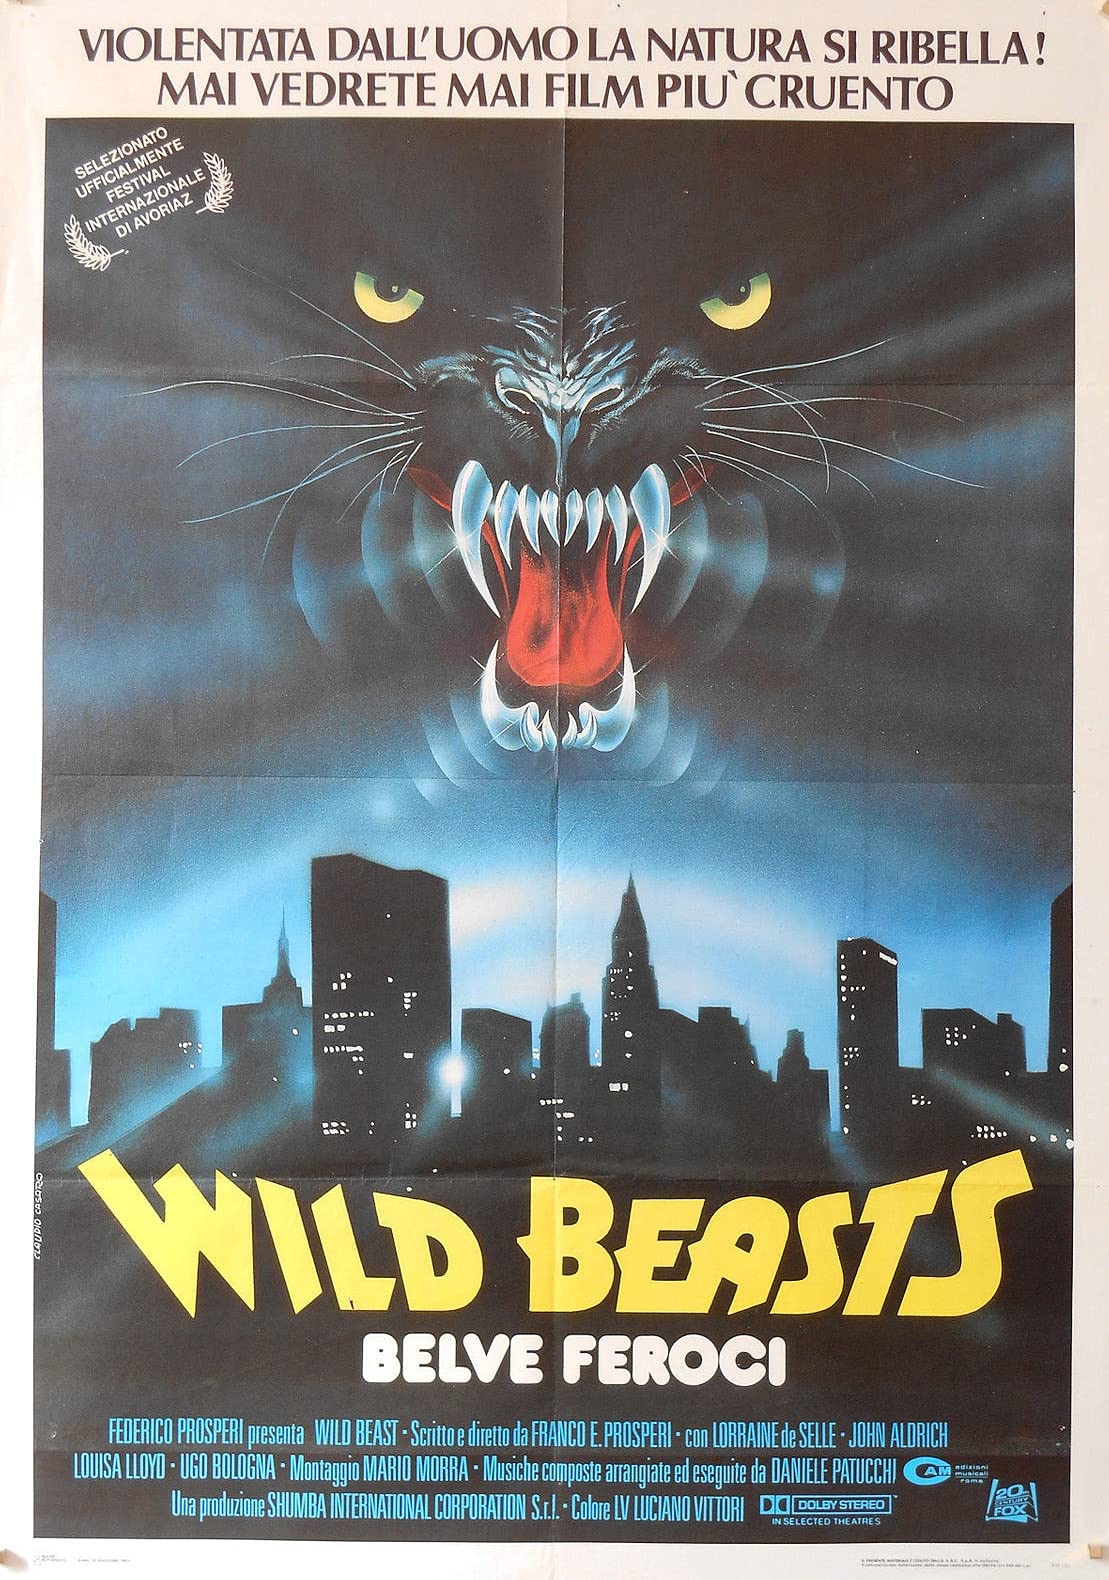 [RECENSIONE] Wild Beasts – belve feroci (Franco Prosperi)